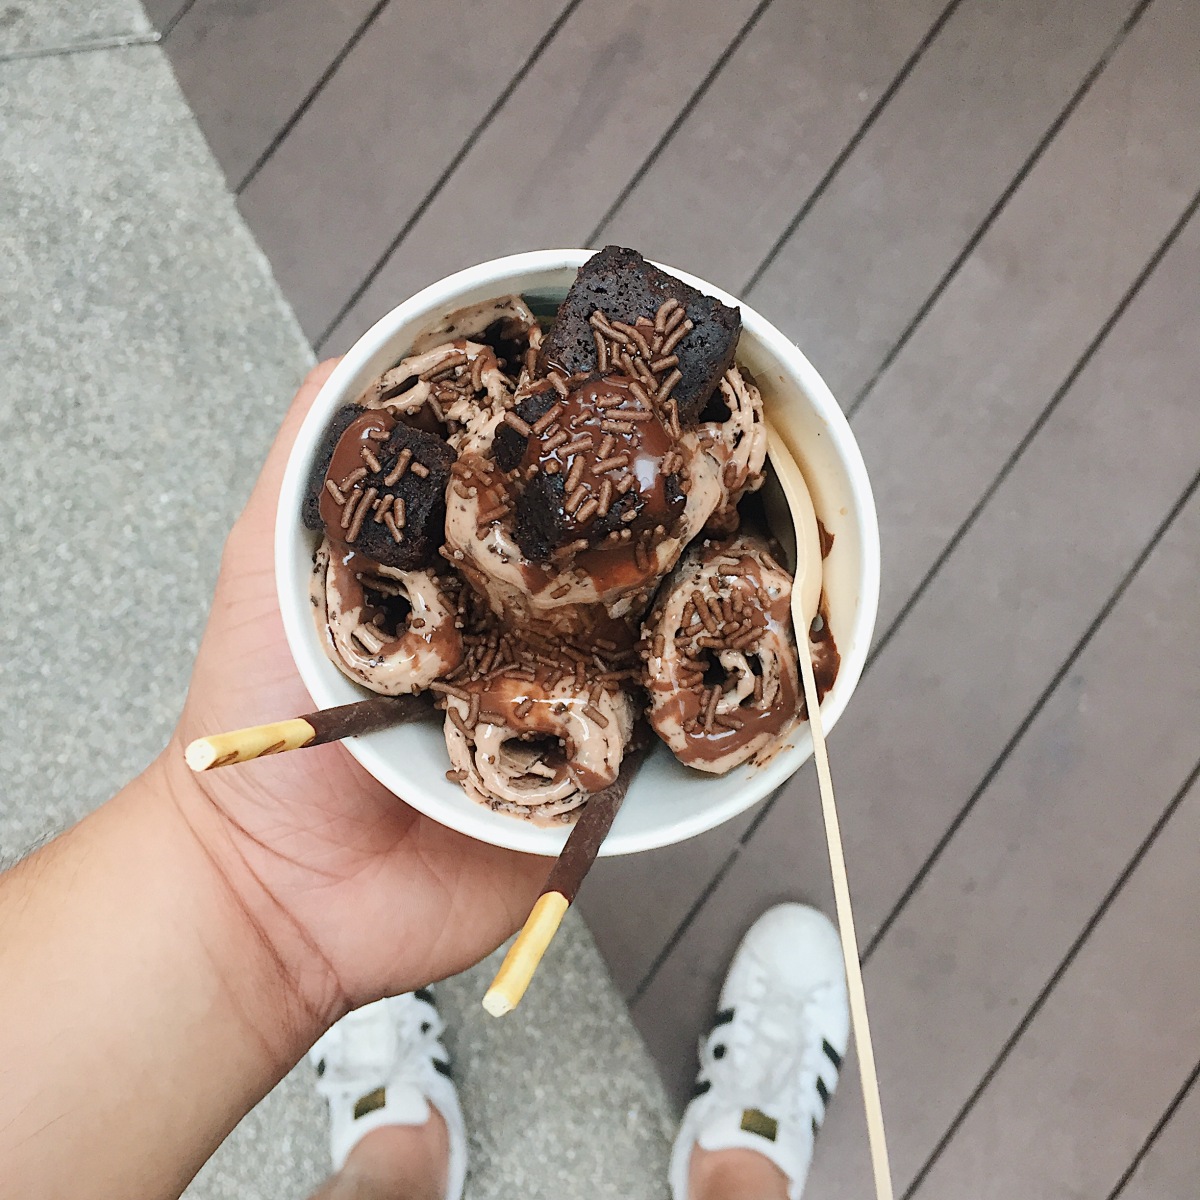 Elait Rolled Ice Cream and Yogurt – Century City Mall